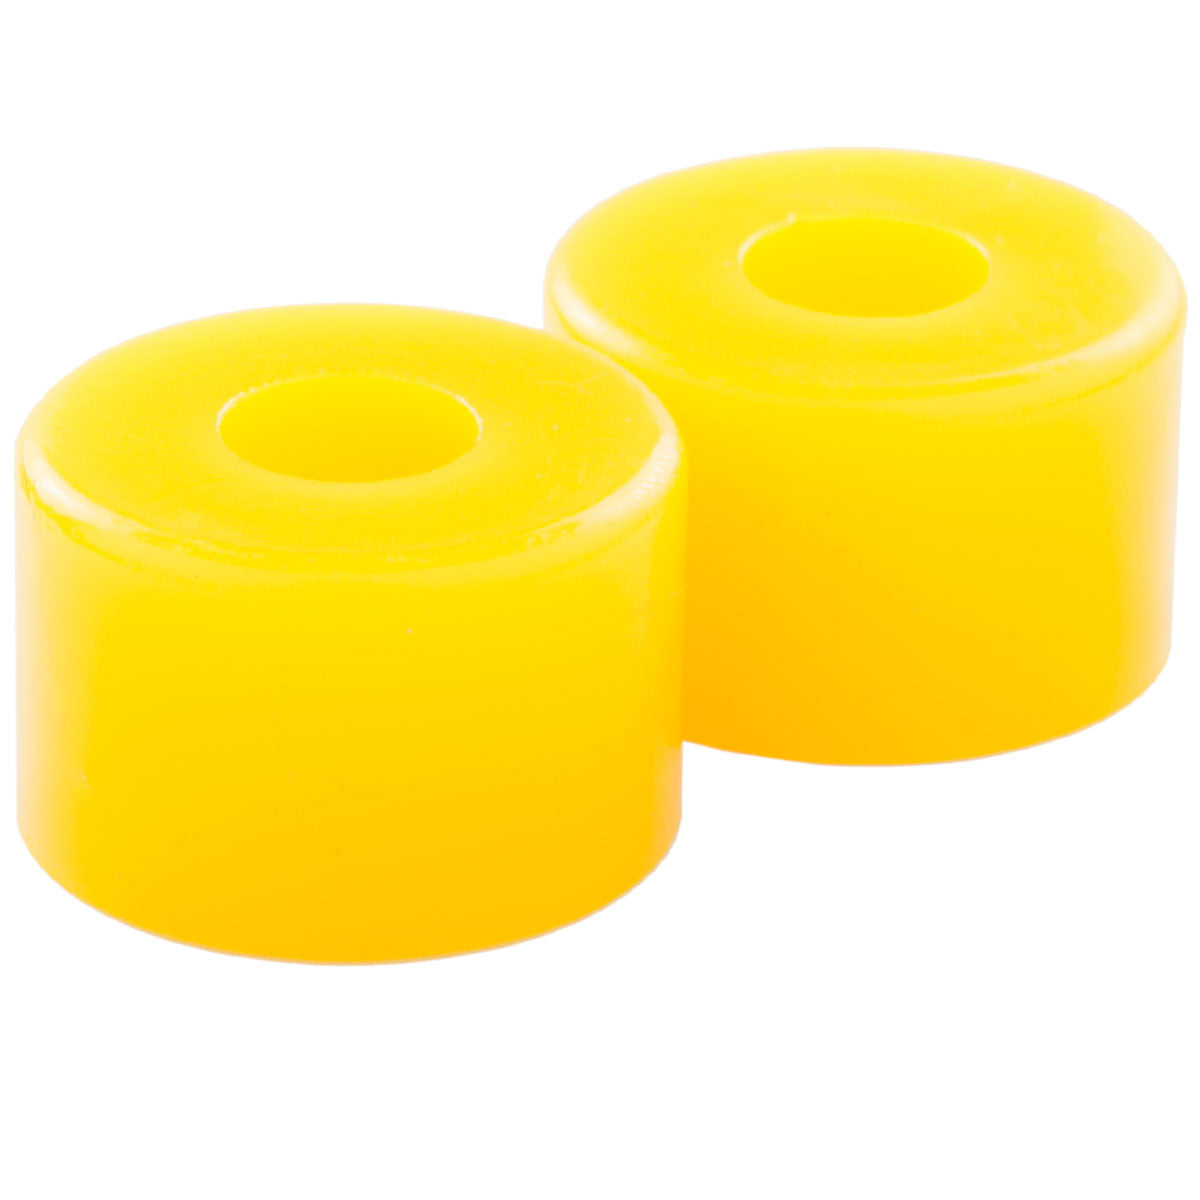 RipTide Barrel Bushings - APS 90a Yellow Gloss image 1